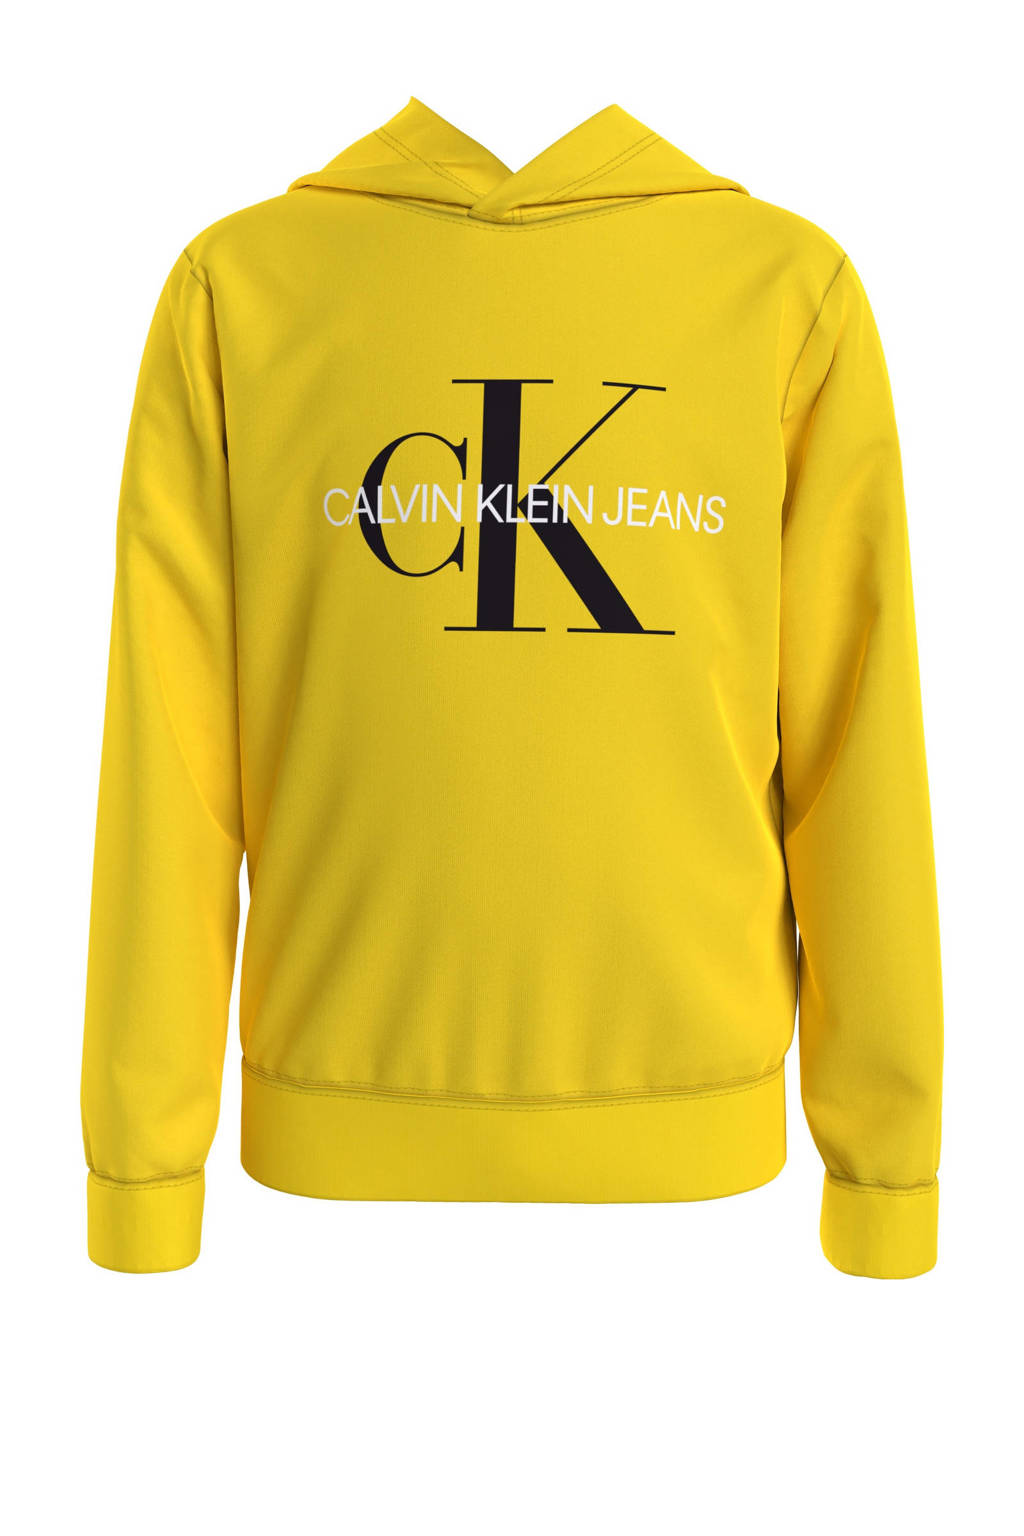 CALVIN KLEIN JEANS hoodie met logo geel/zwart/wit